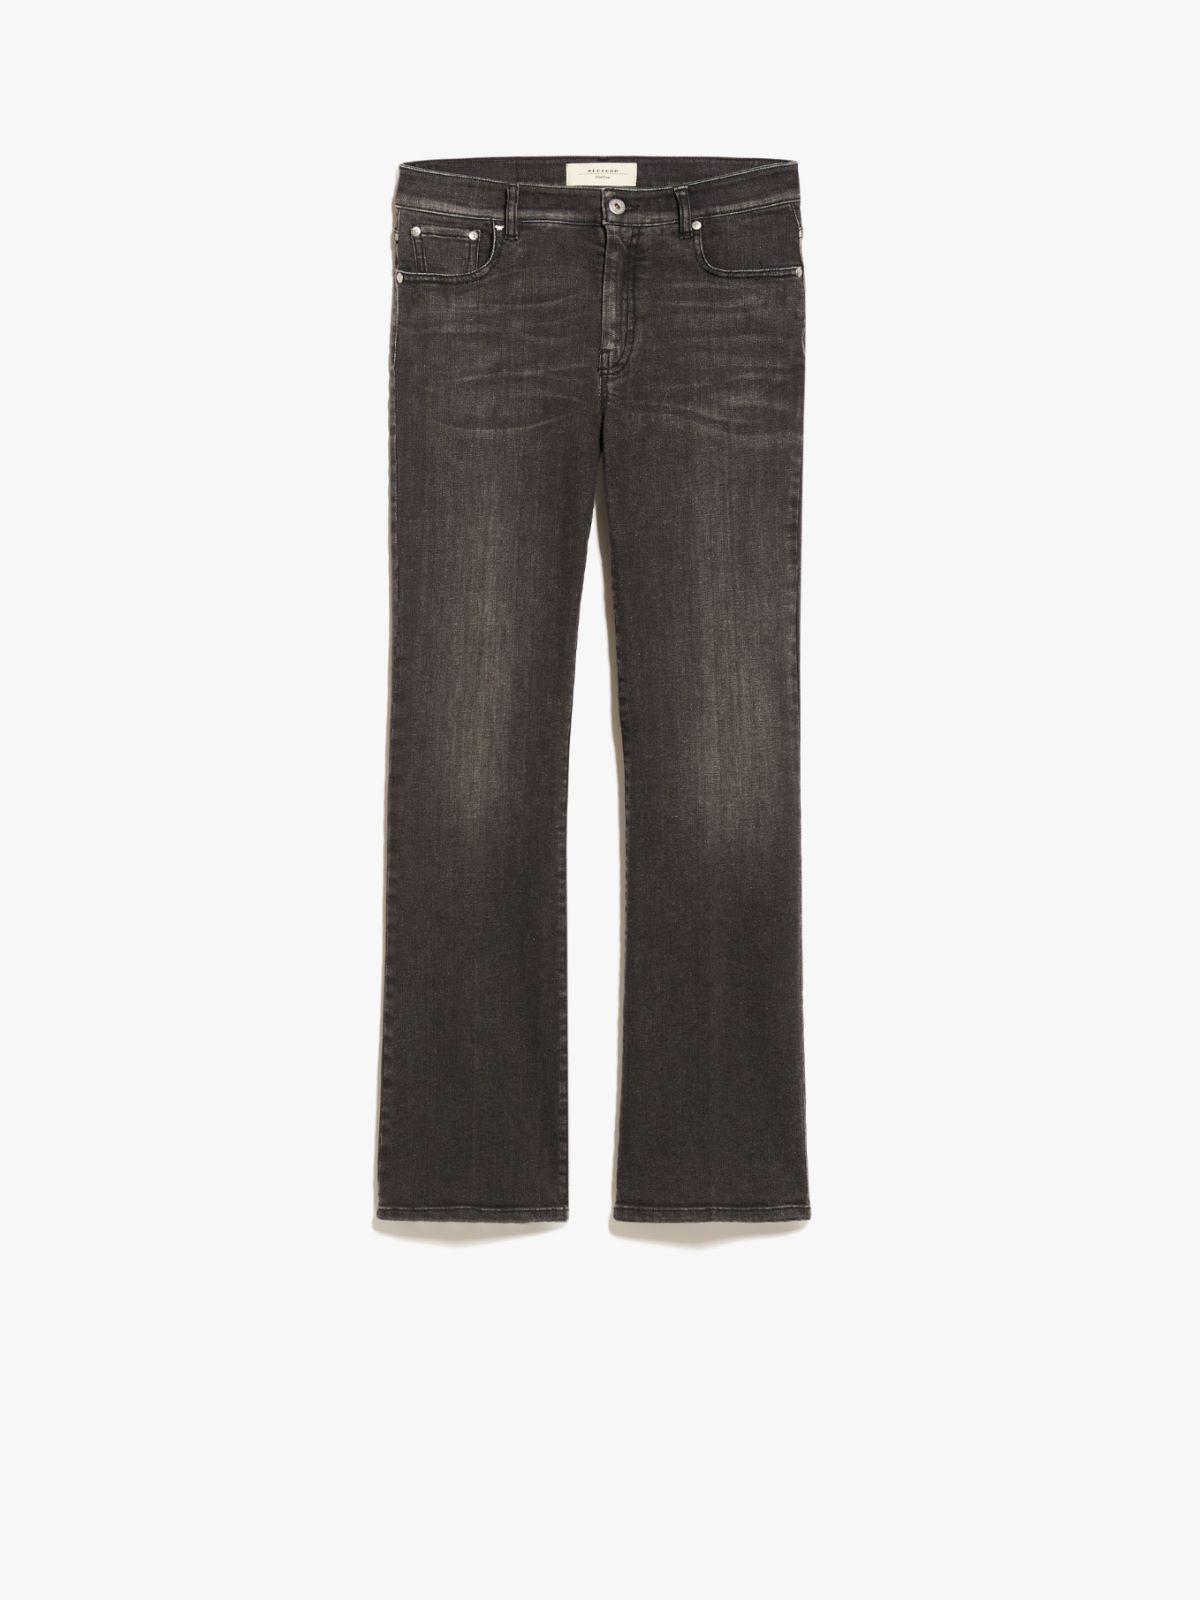 Flared cotton denim jeans, black | Weekend Max Mara